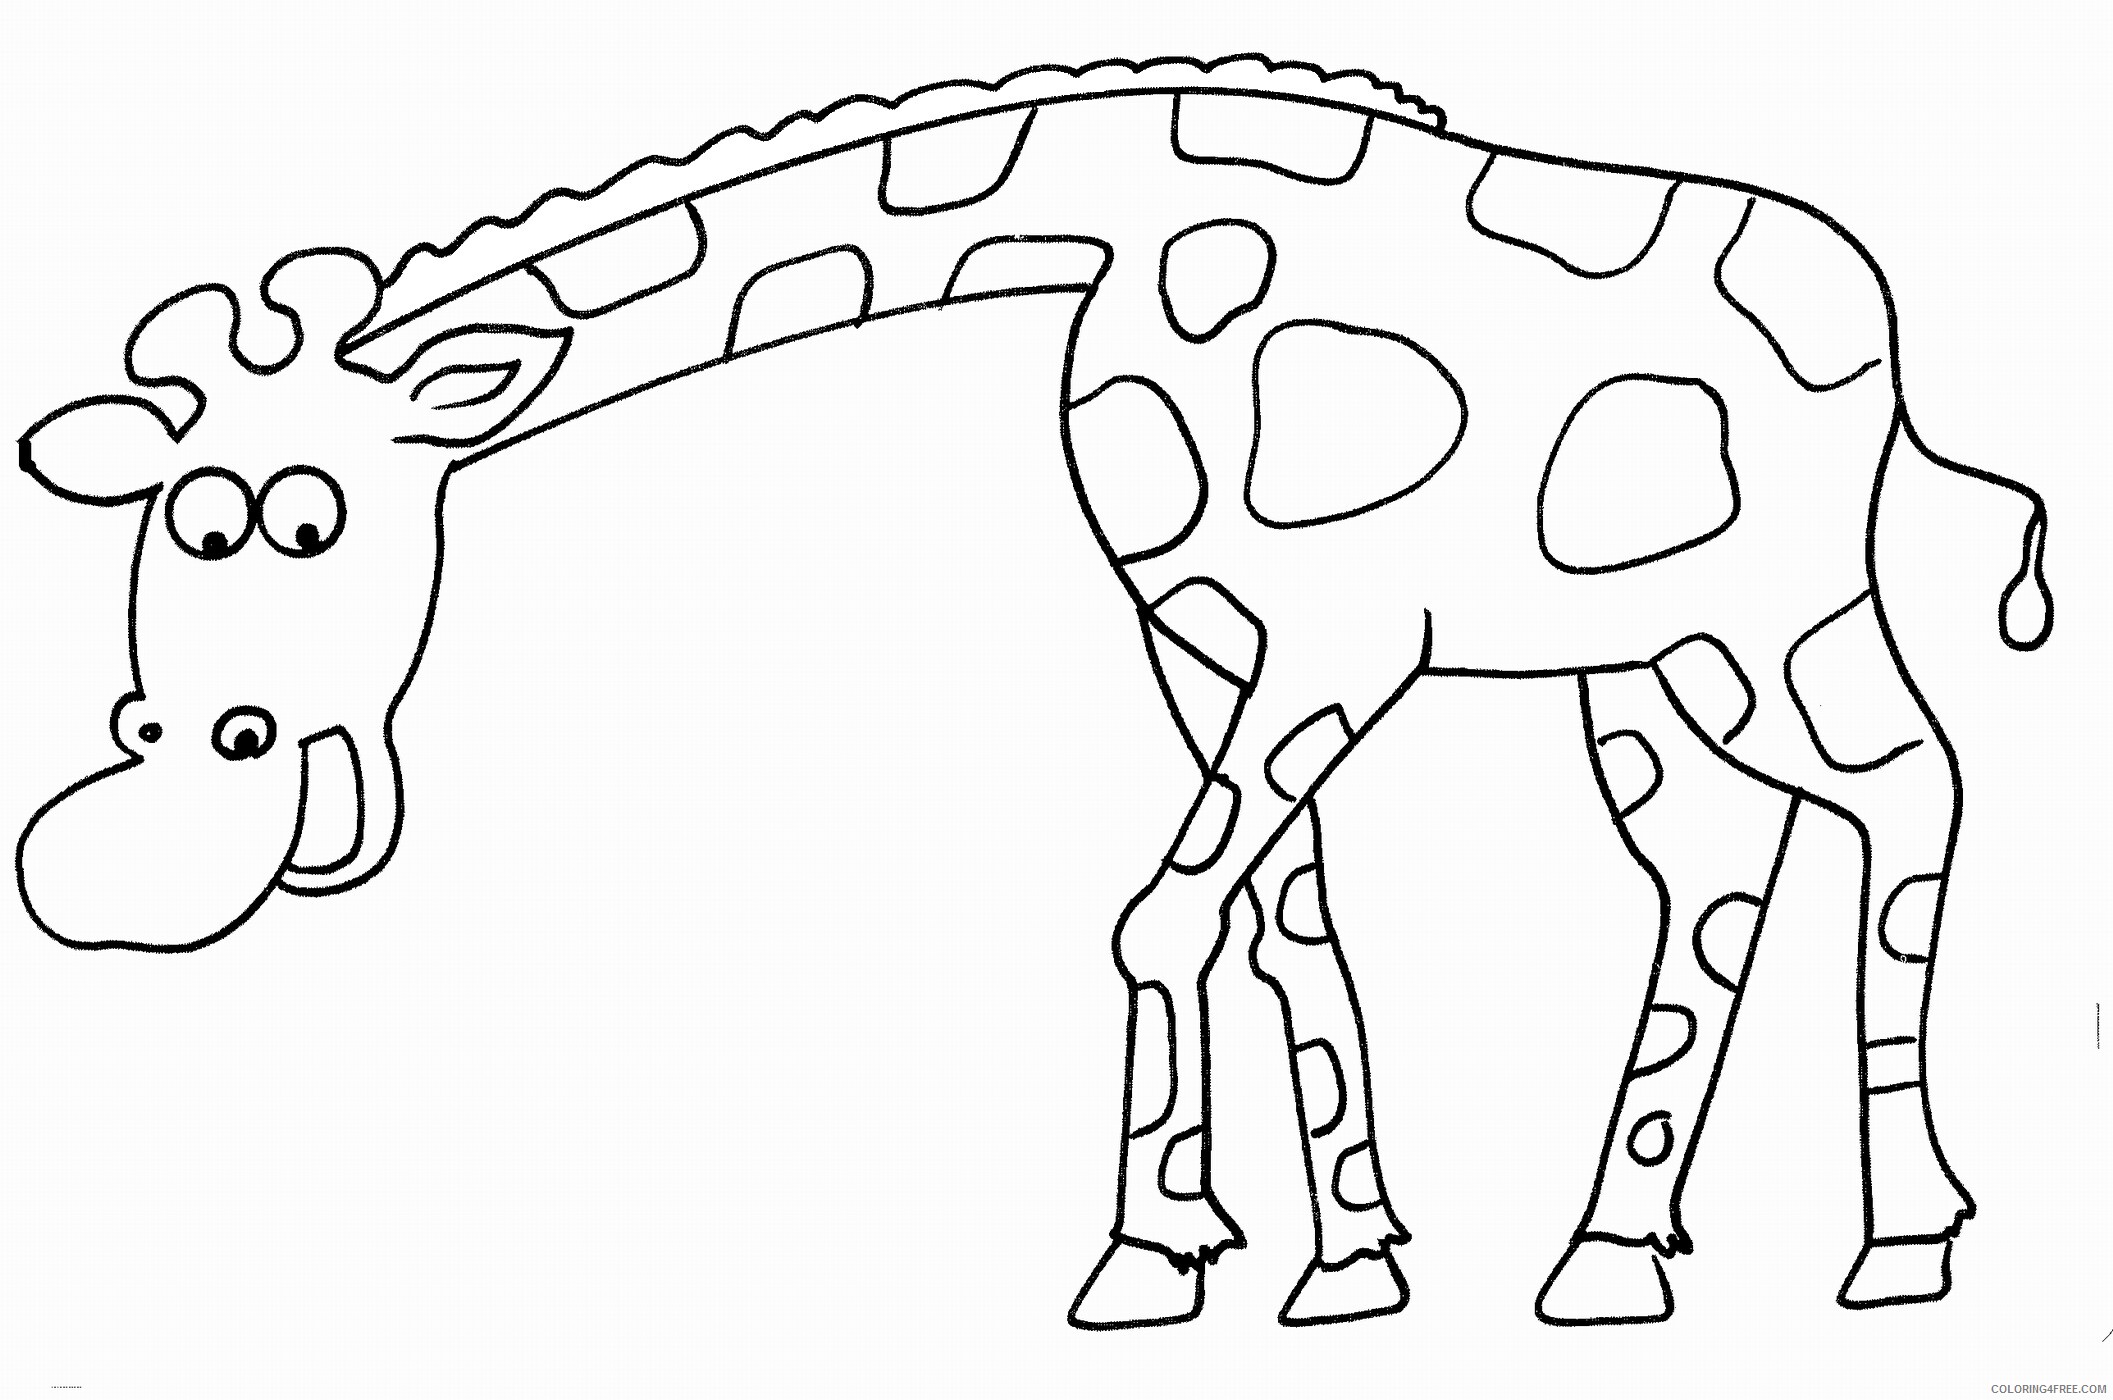 Giraffe Coloring Pages Animal Printable Sheets giraffe_cl_02 2021 2394 Coloring4free